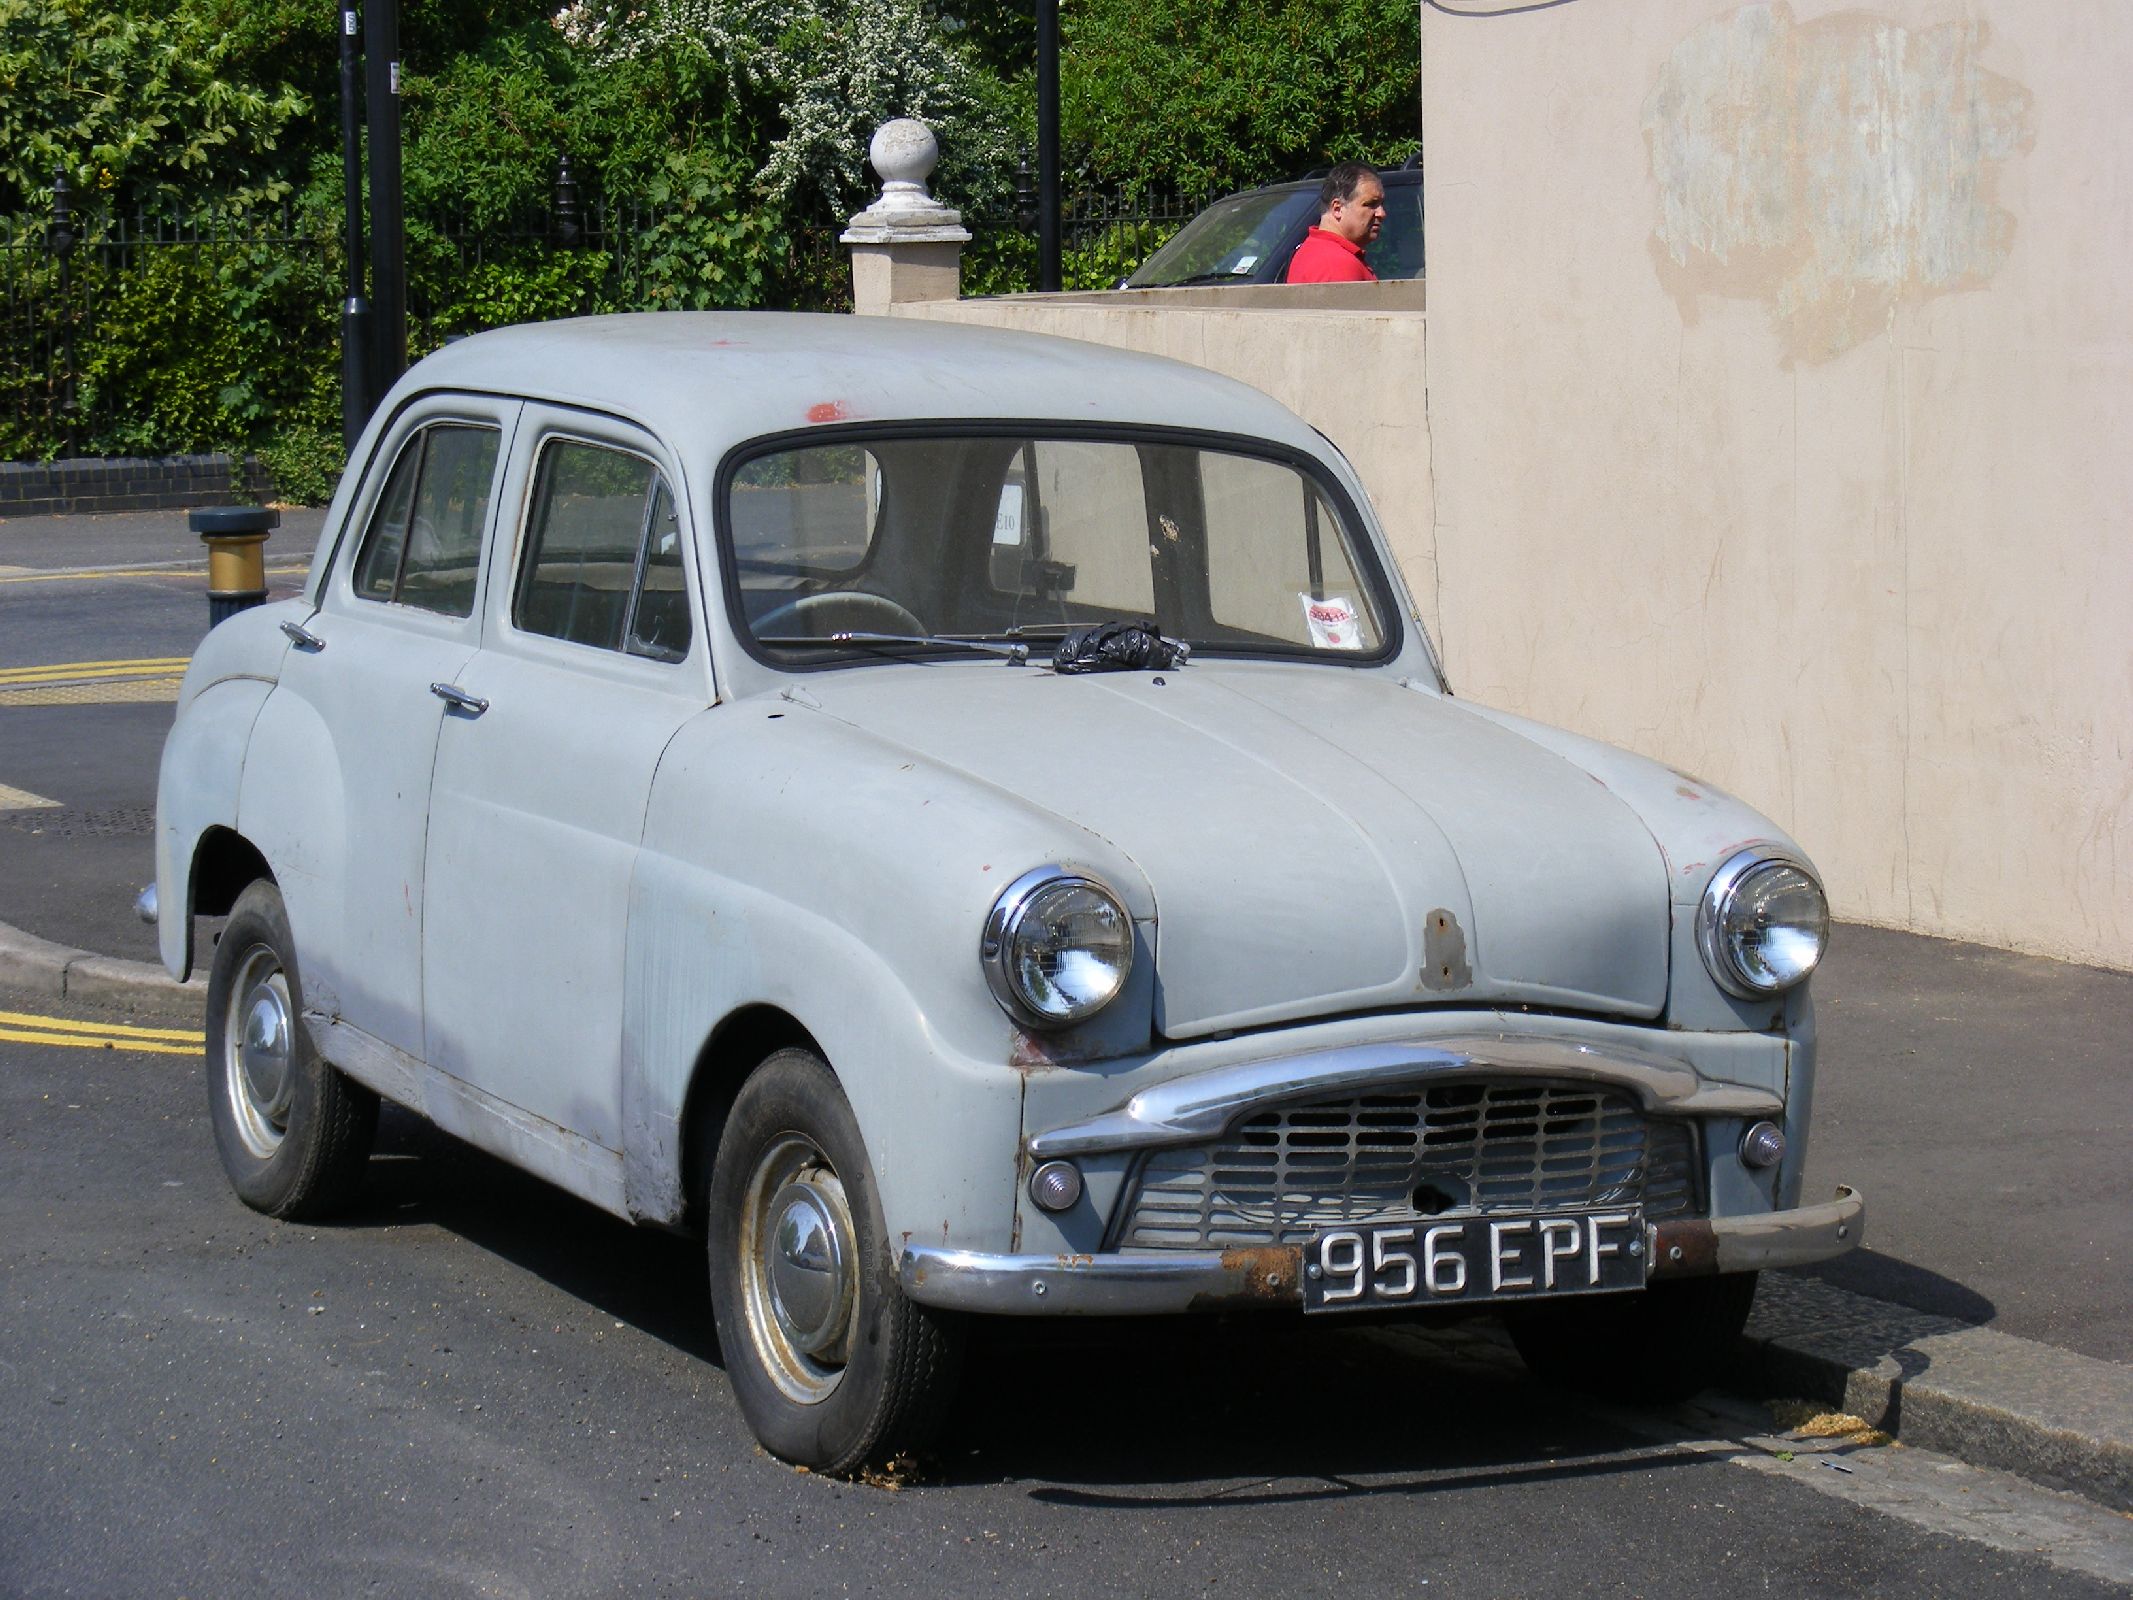 File:1957 Standard 10, London E10, appropriately. - Flickr ...